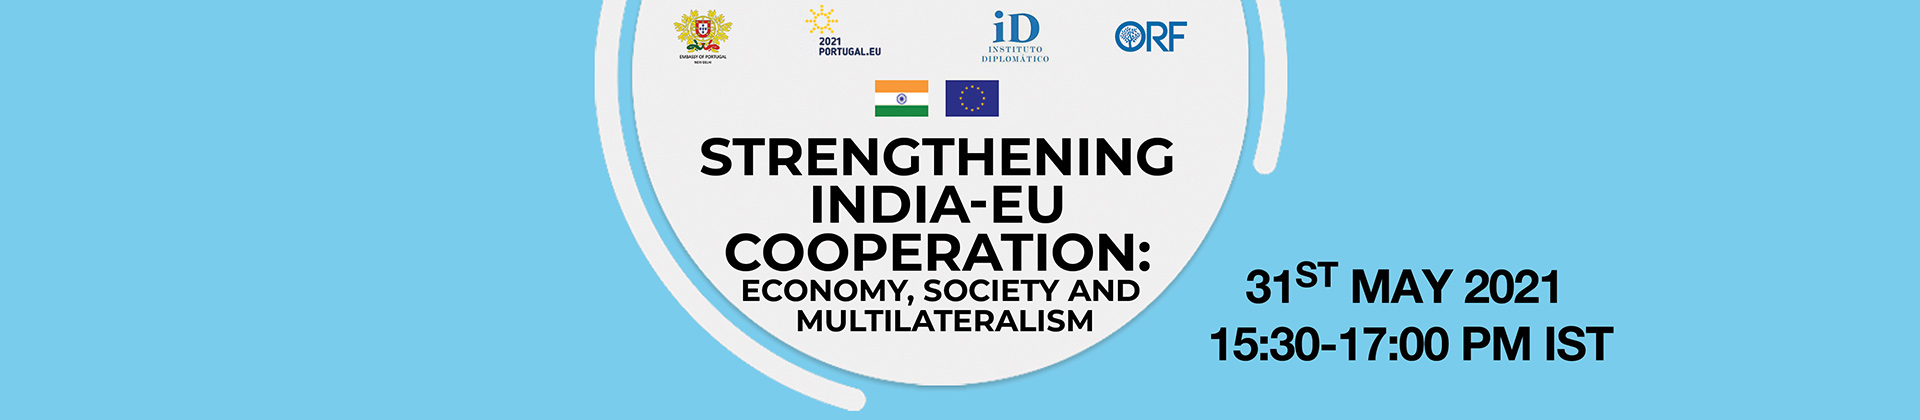 Strengthening India-EU cooperation: Economy, society and multilateralism